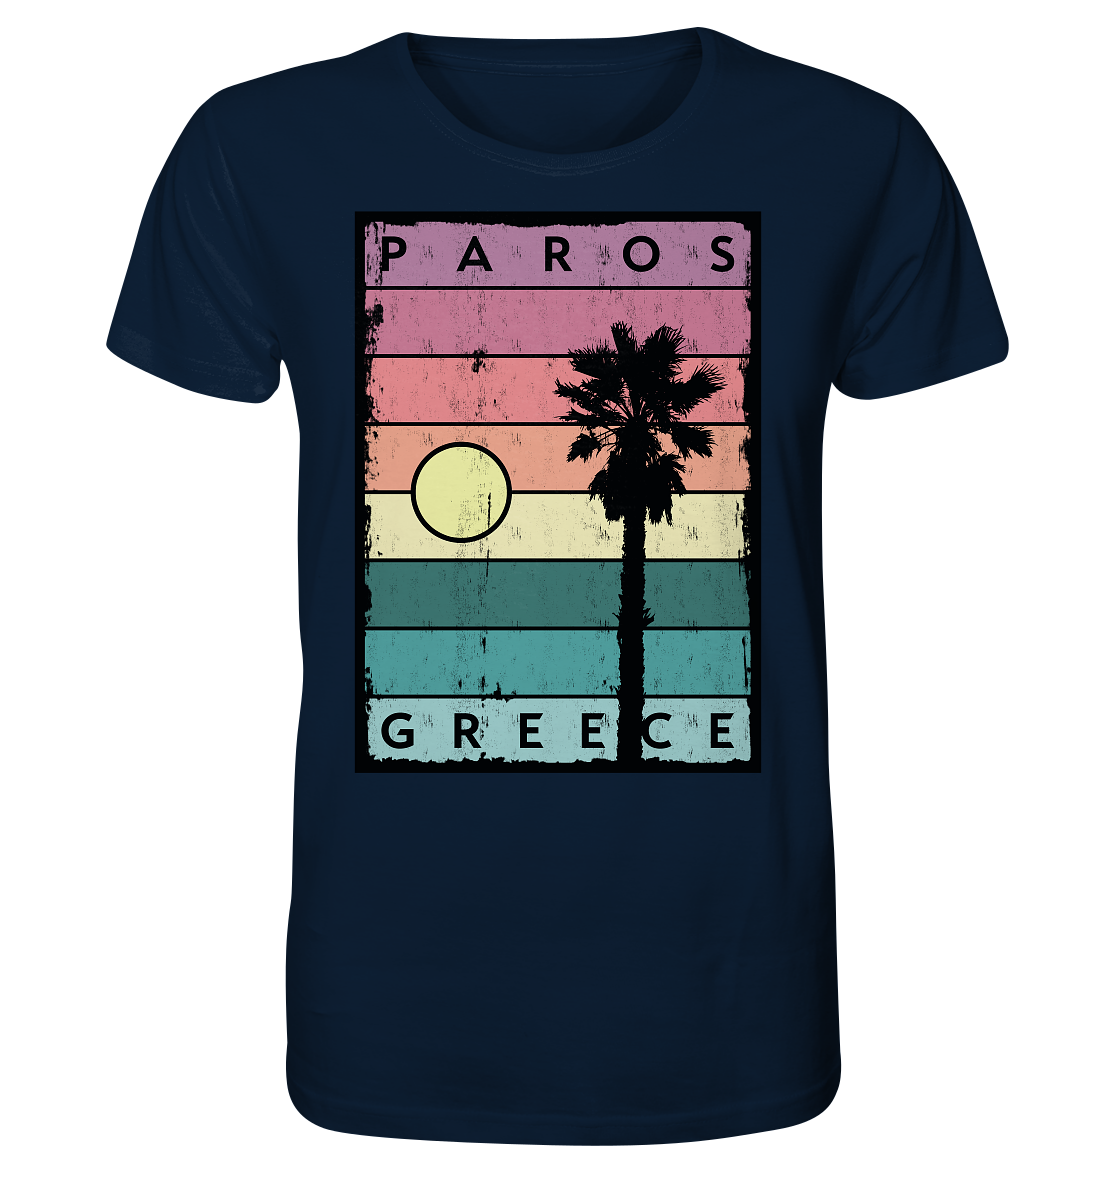 Sunset stripes & Palm tree Paros Greece - Organic Shirt